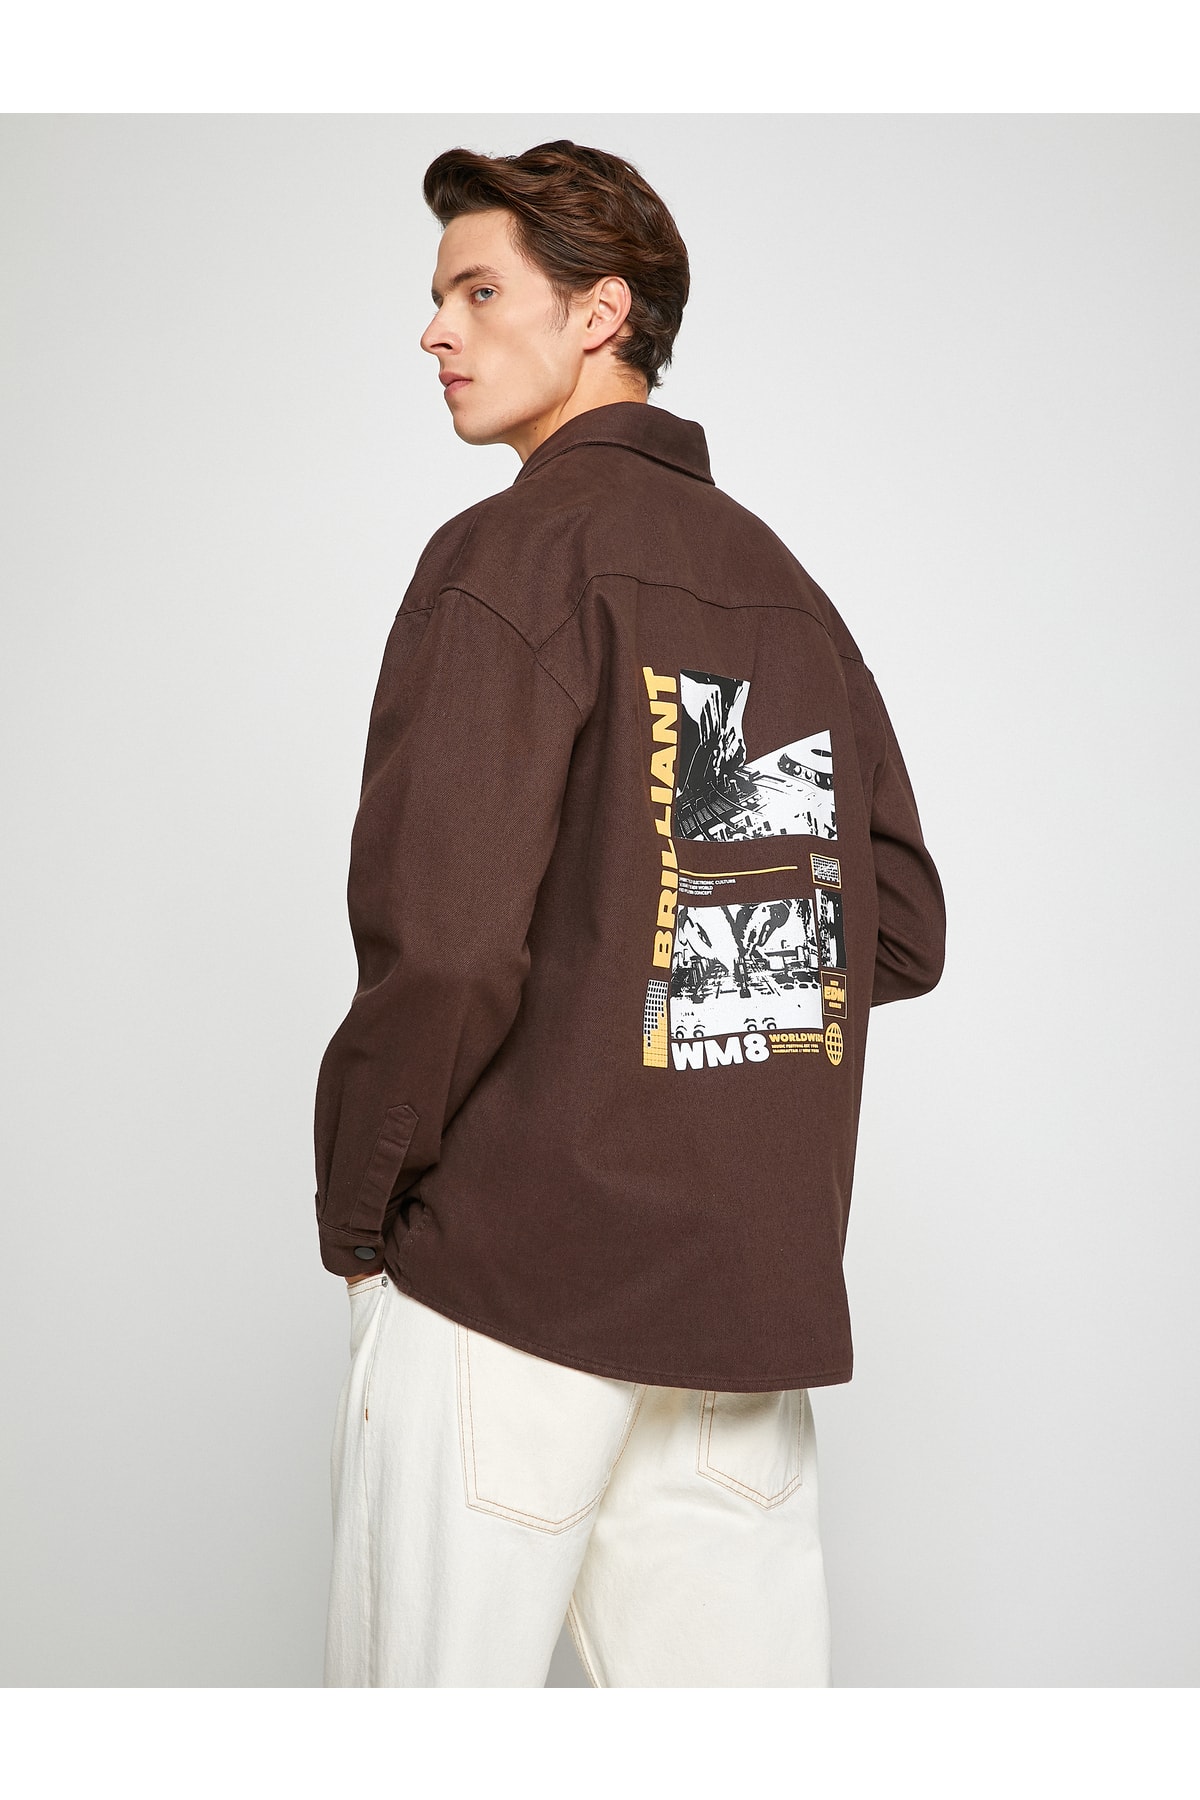 Koton Basic Shirt Jacket с отпечатан слоган, джобен детайл и закопчалка.